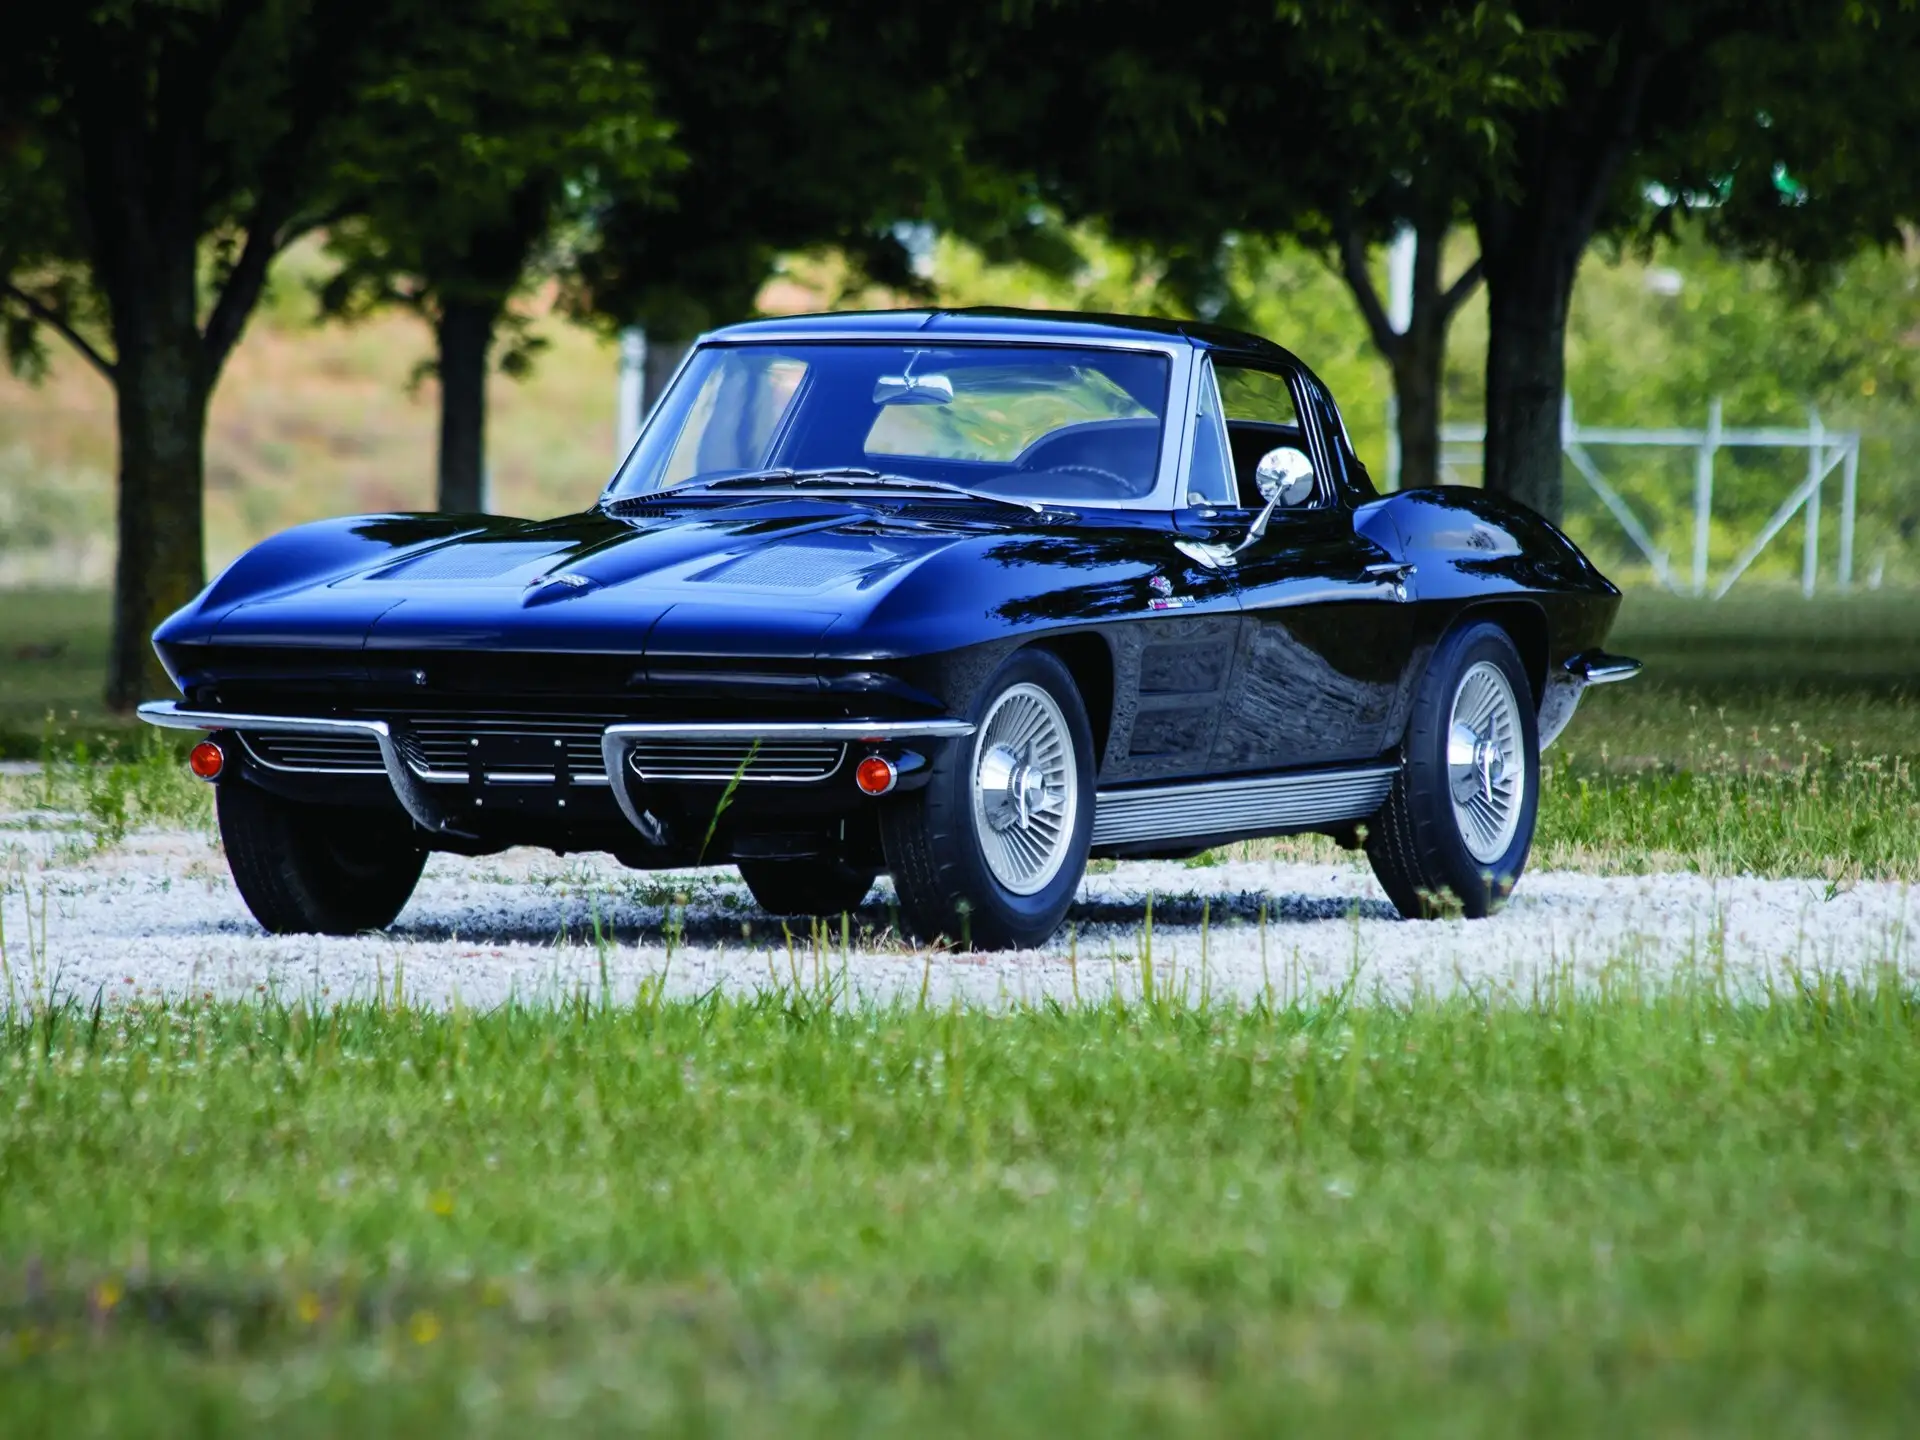 Corvette Of The Day: 1963 Chevrolet Corvette Z06 "Big Tank"